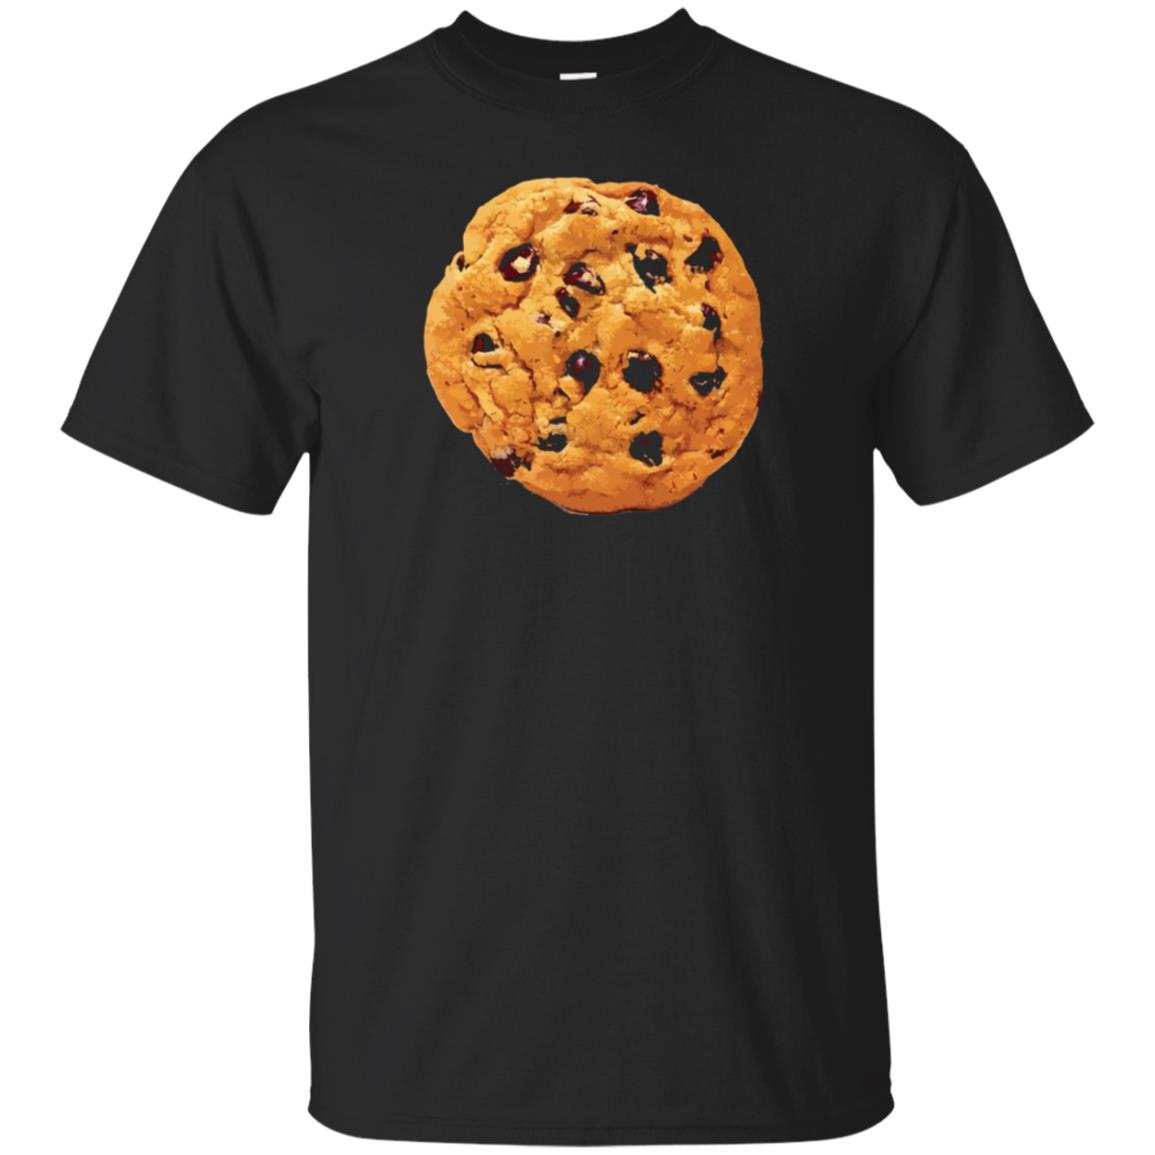  Cookie Halloween Funny Costume Tshirt